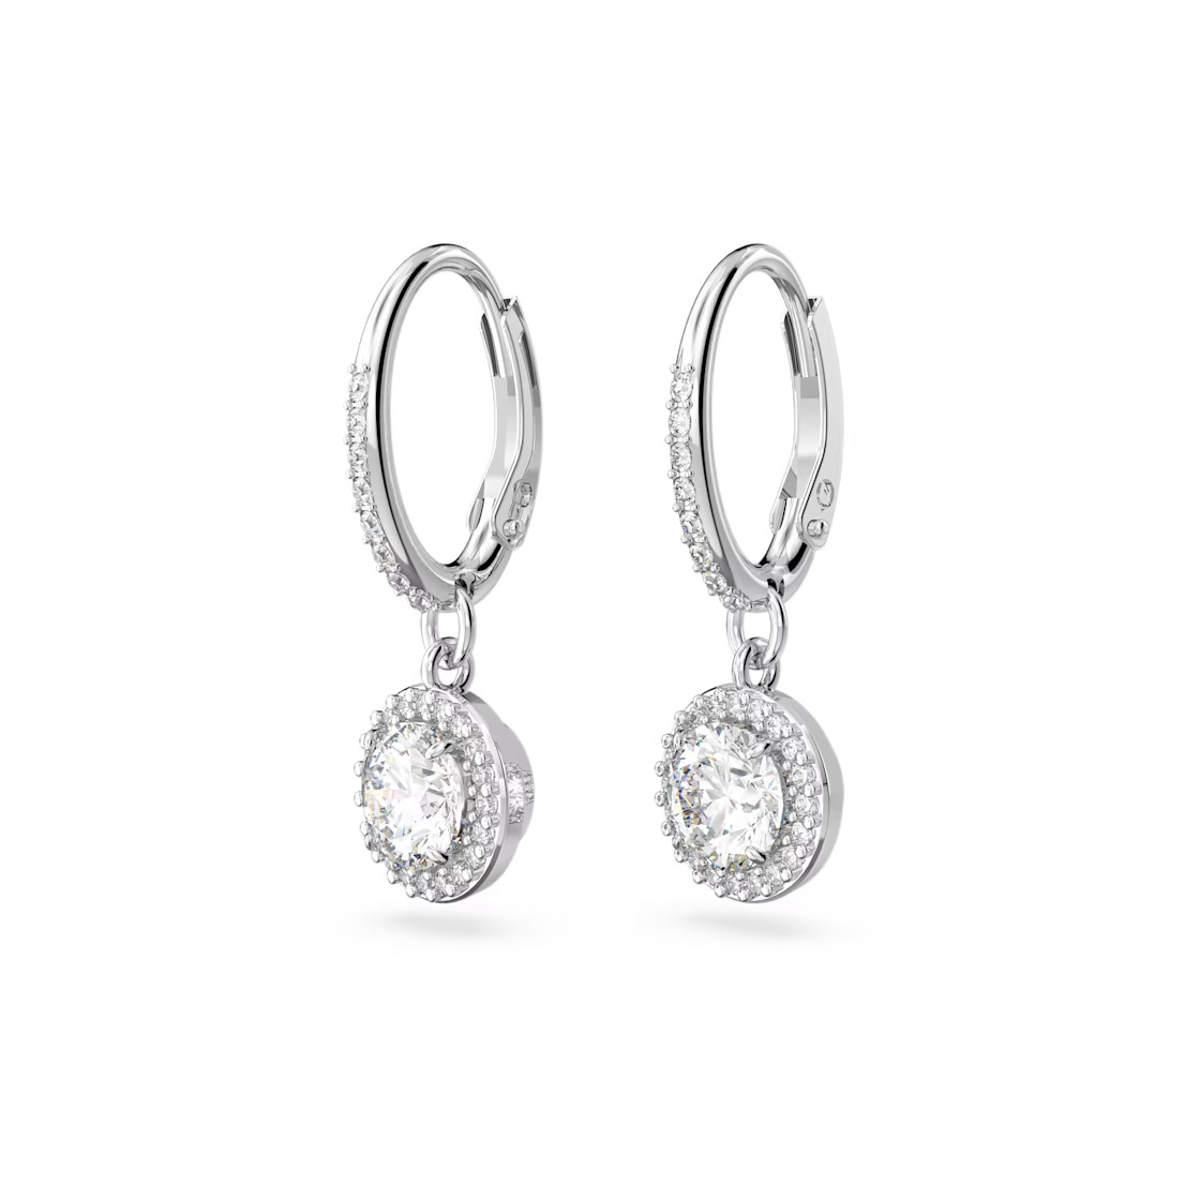 SWAROVSKI earrings 5636270